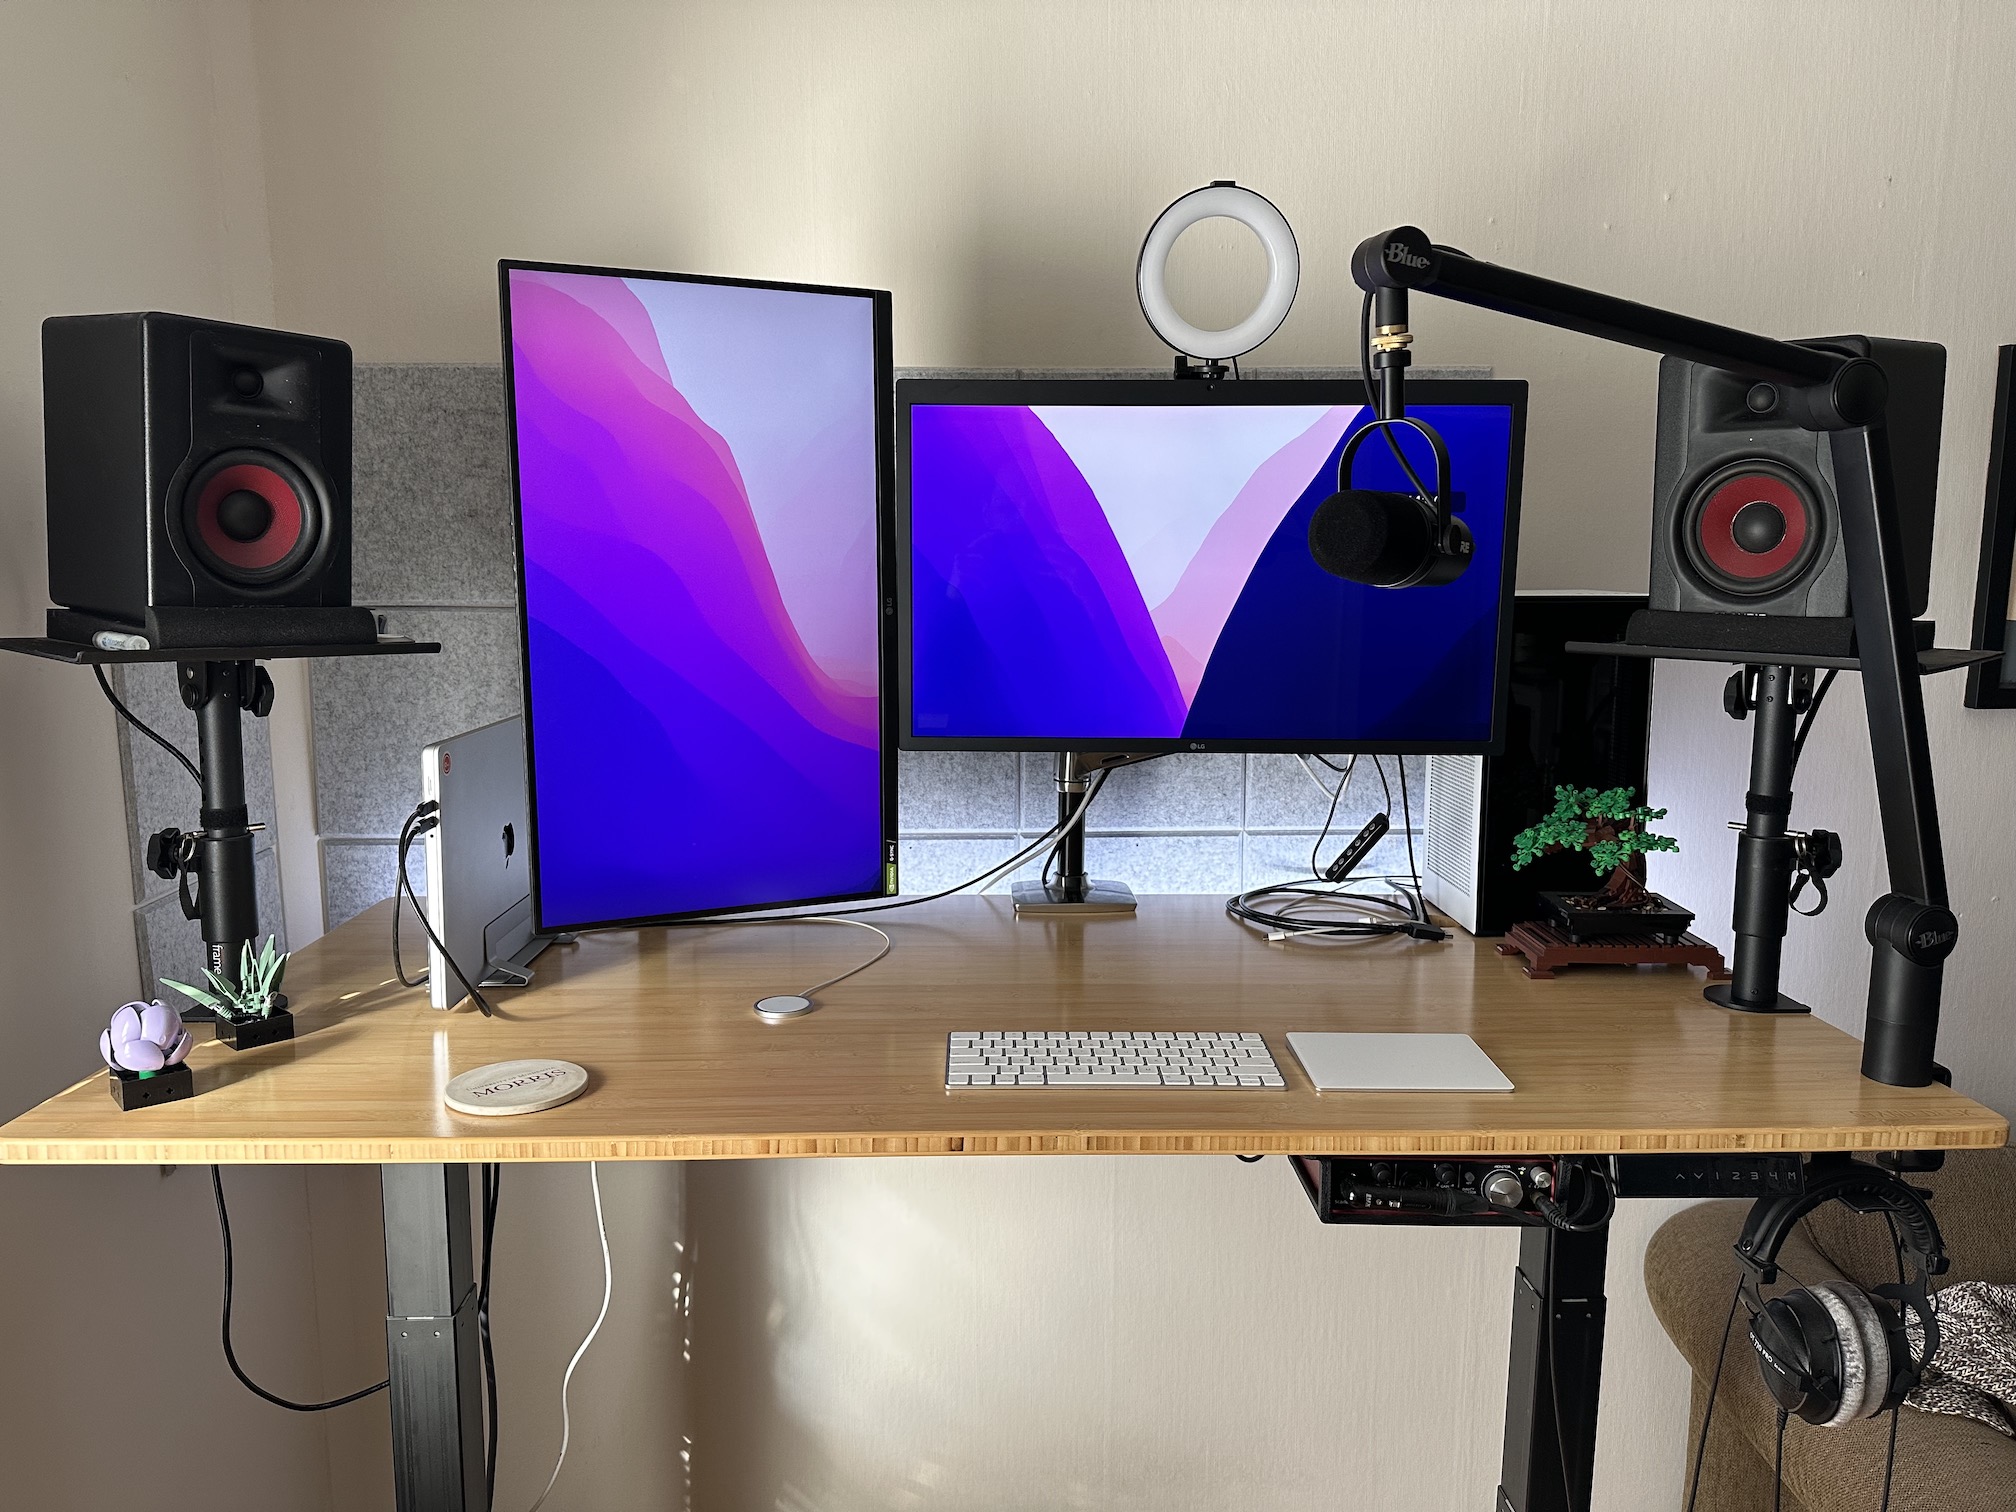 My home desk